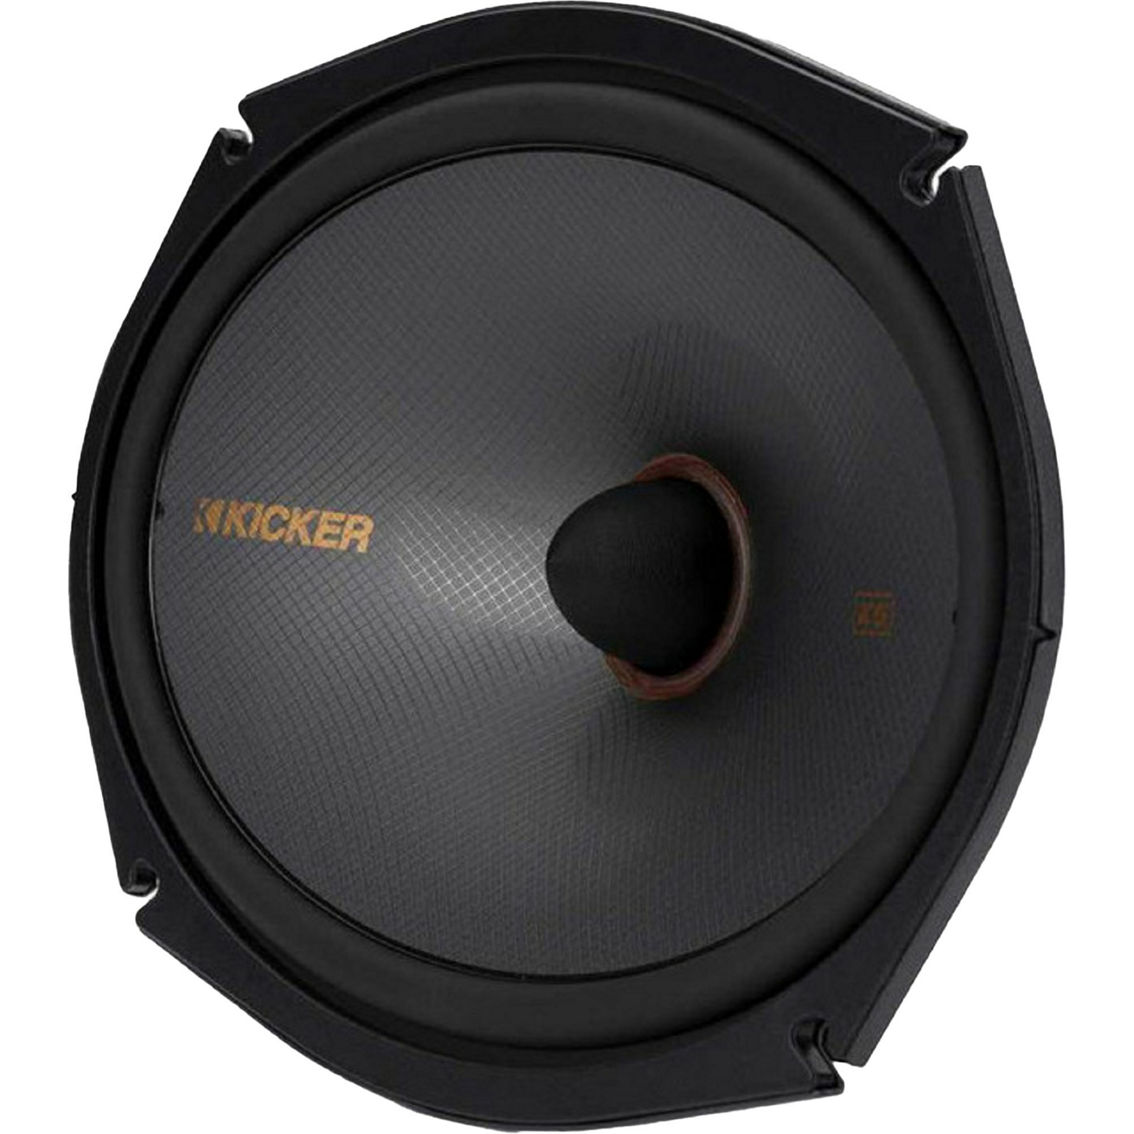 Kicker 51KSS269 400W Peak (200W RMS) Component Speaker System - Image 3 of 4